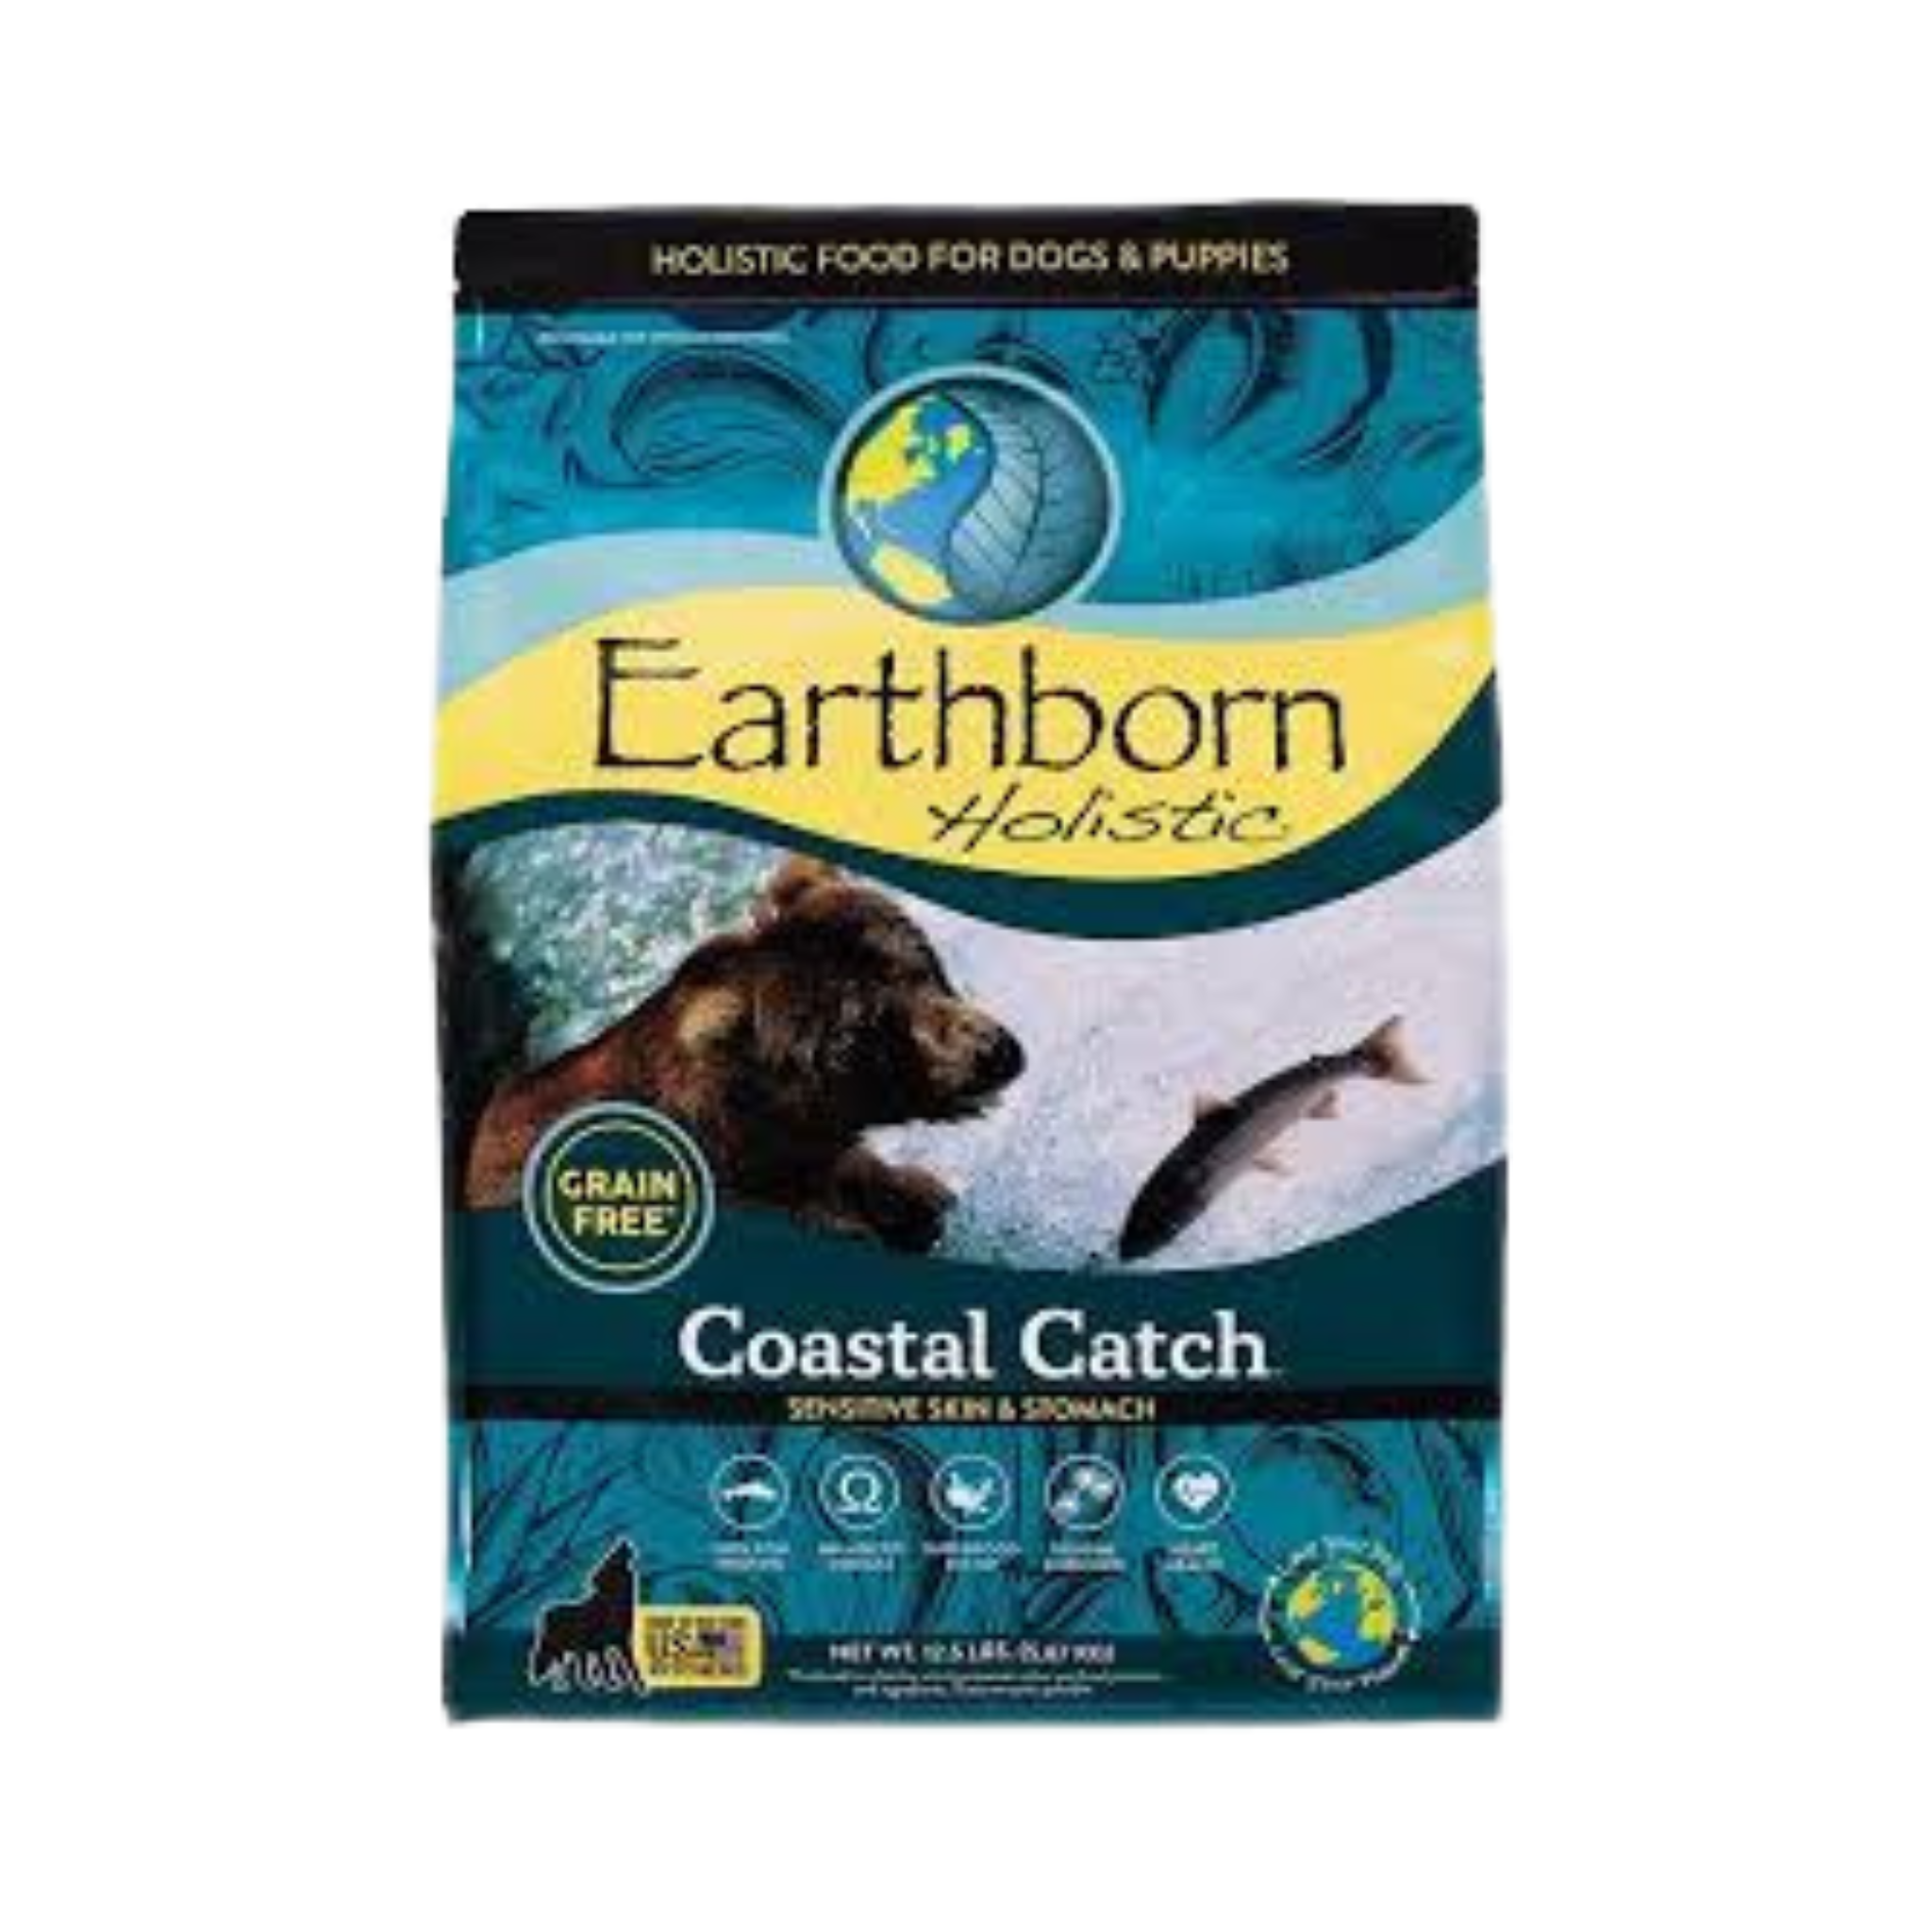 Earthborn Coastal Catch Dog